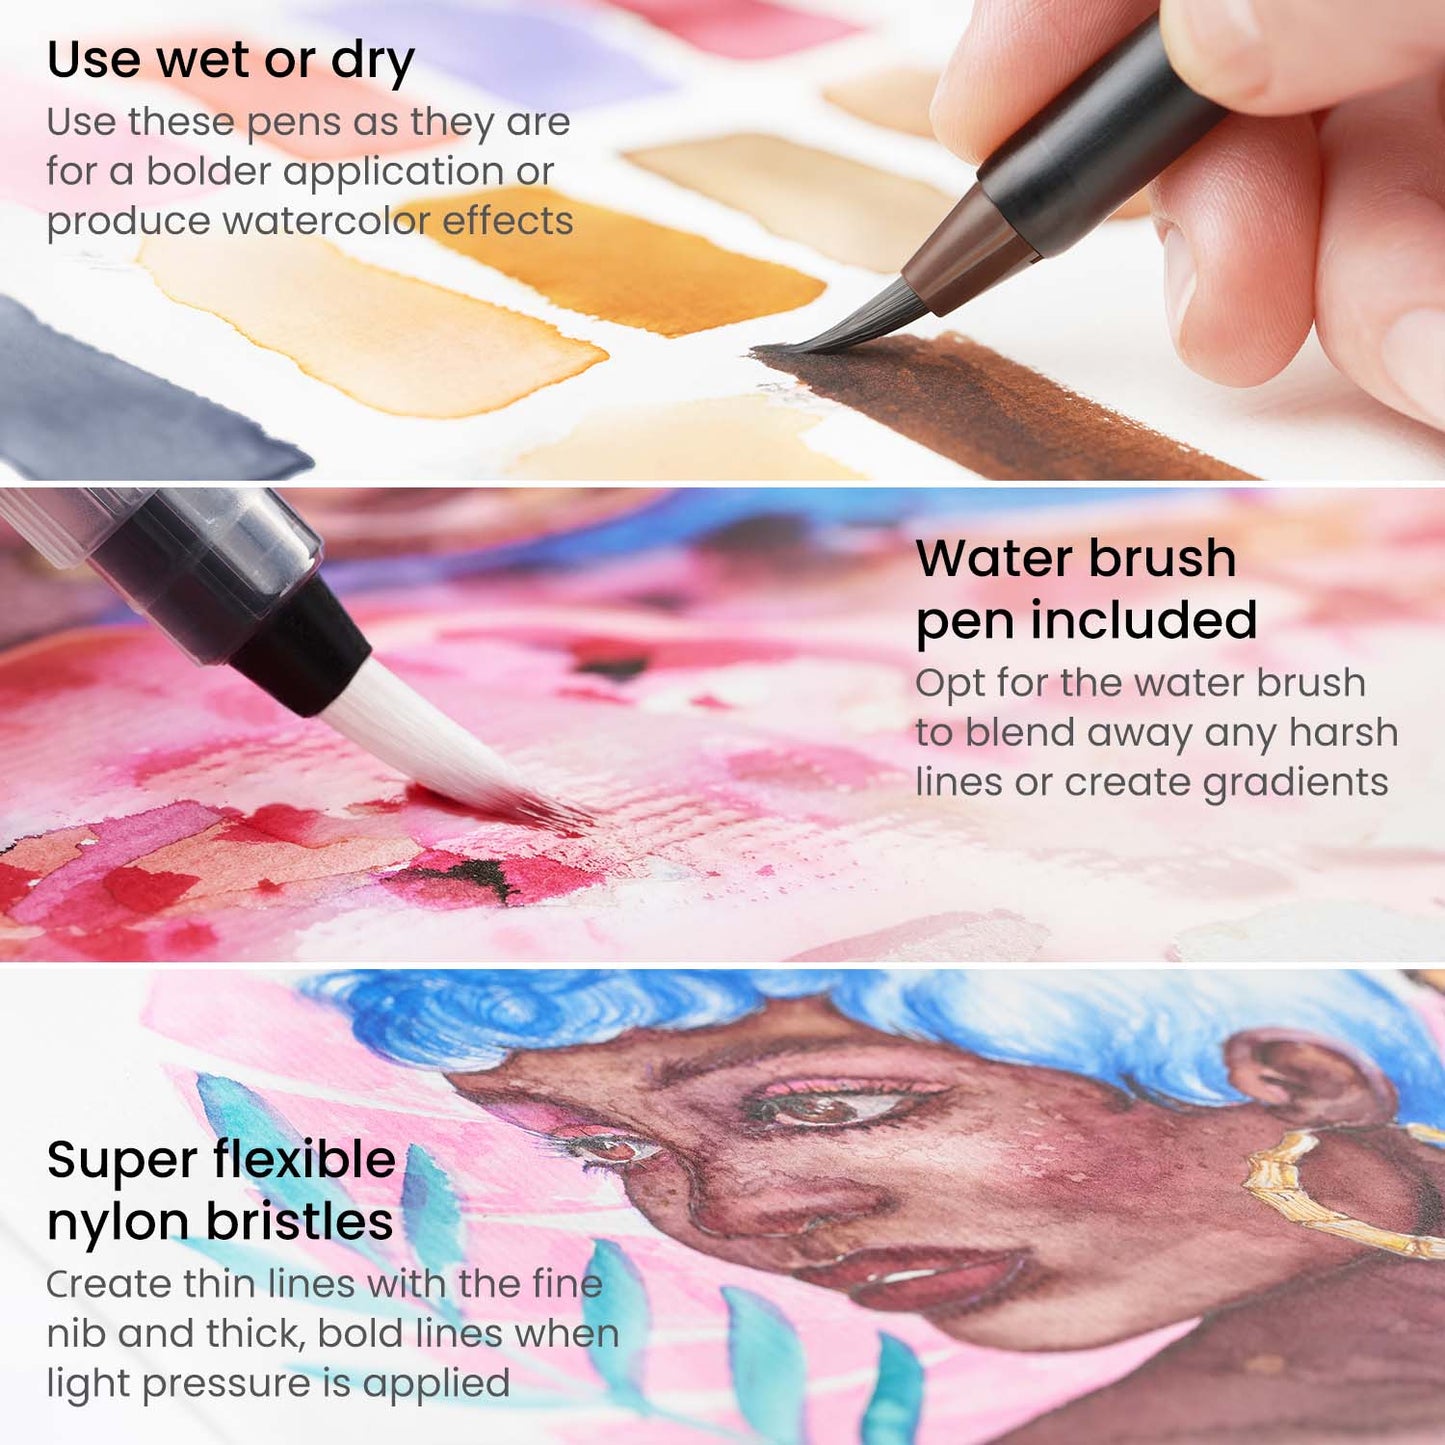 Arteza Real Brush Pens, Portrait Tones - 12 Pack